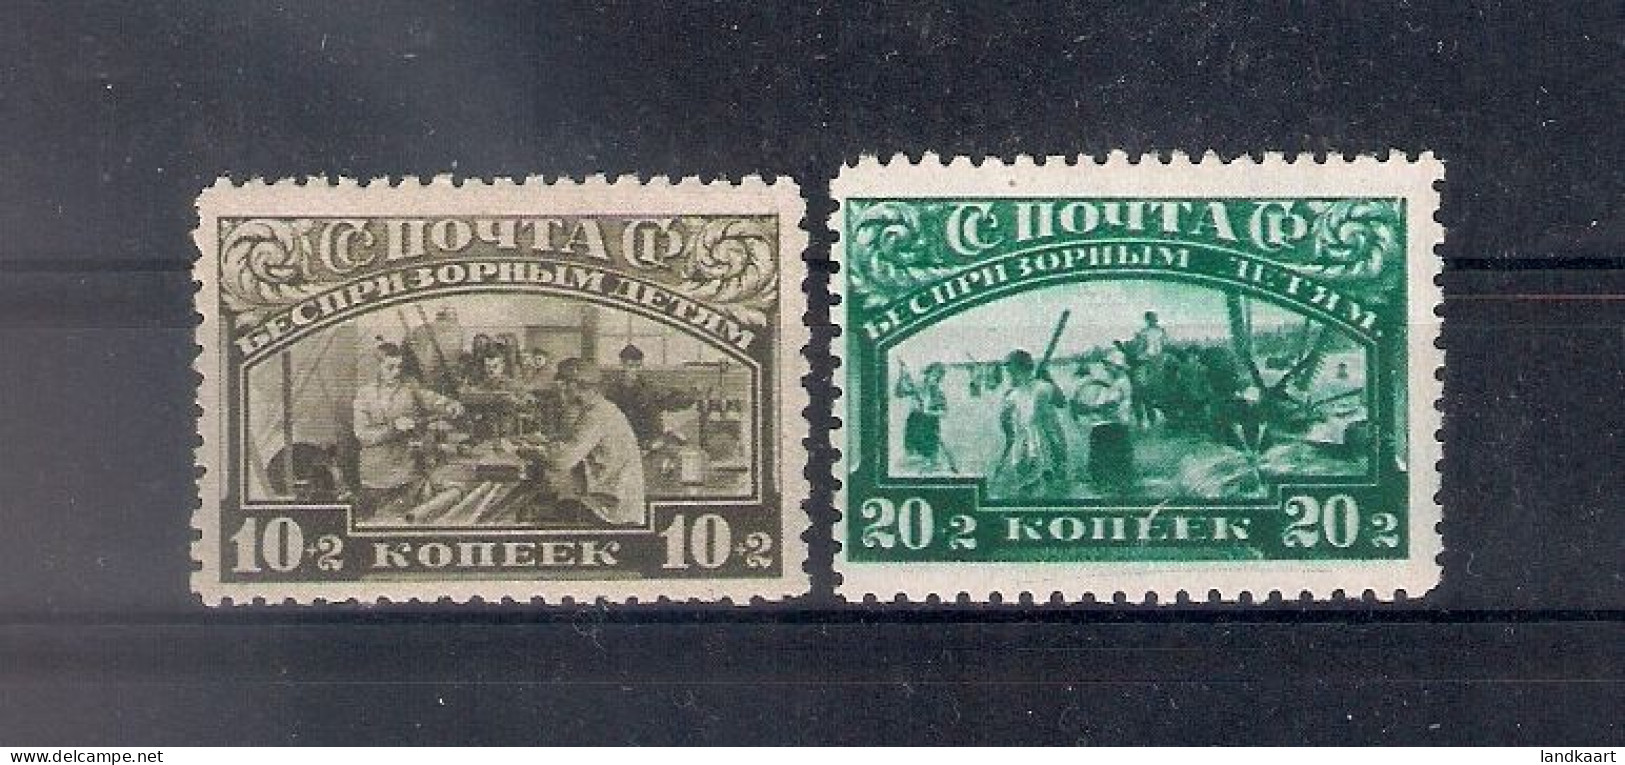 Russia 1930, Michel Nr 383-84, MLH OG - Nuevos